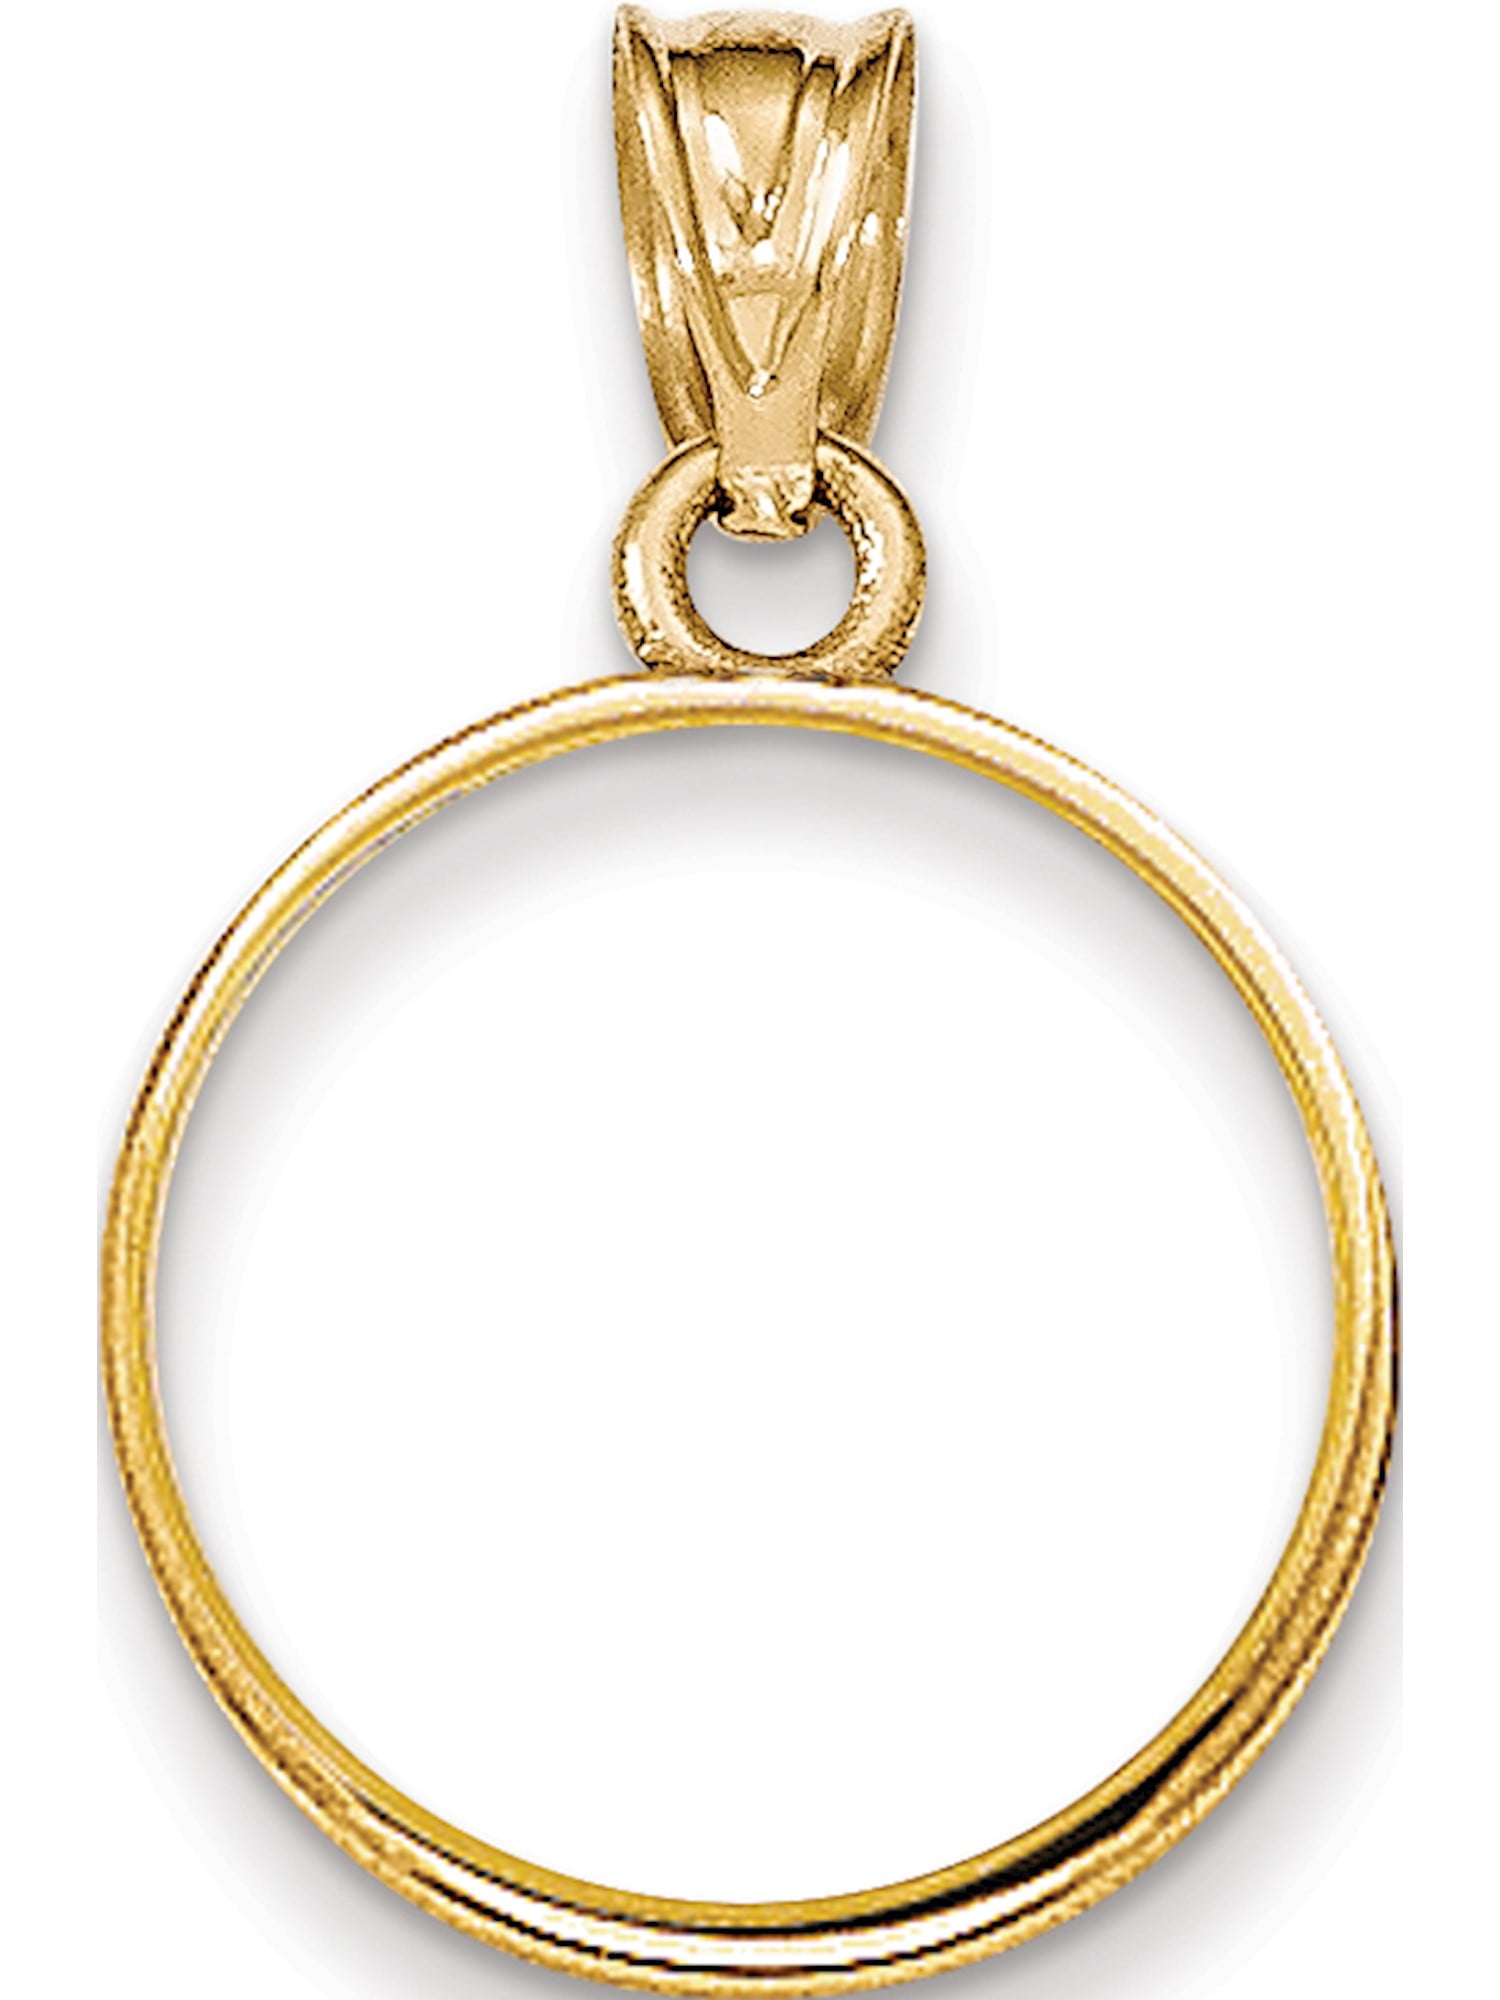 Eagle & Snake Pendant Solid 14k Yellow Gold Charm Diamond Cut Polished Design 